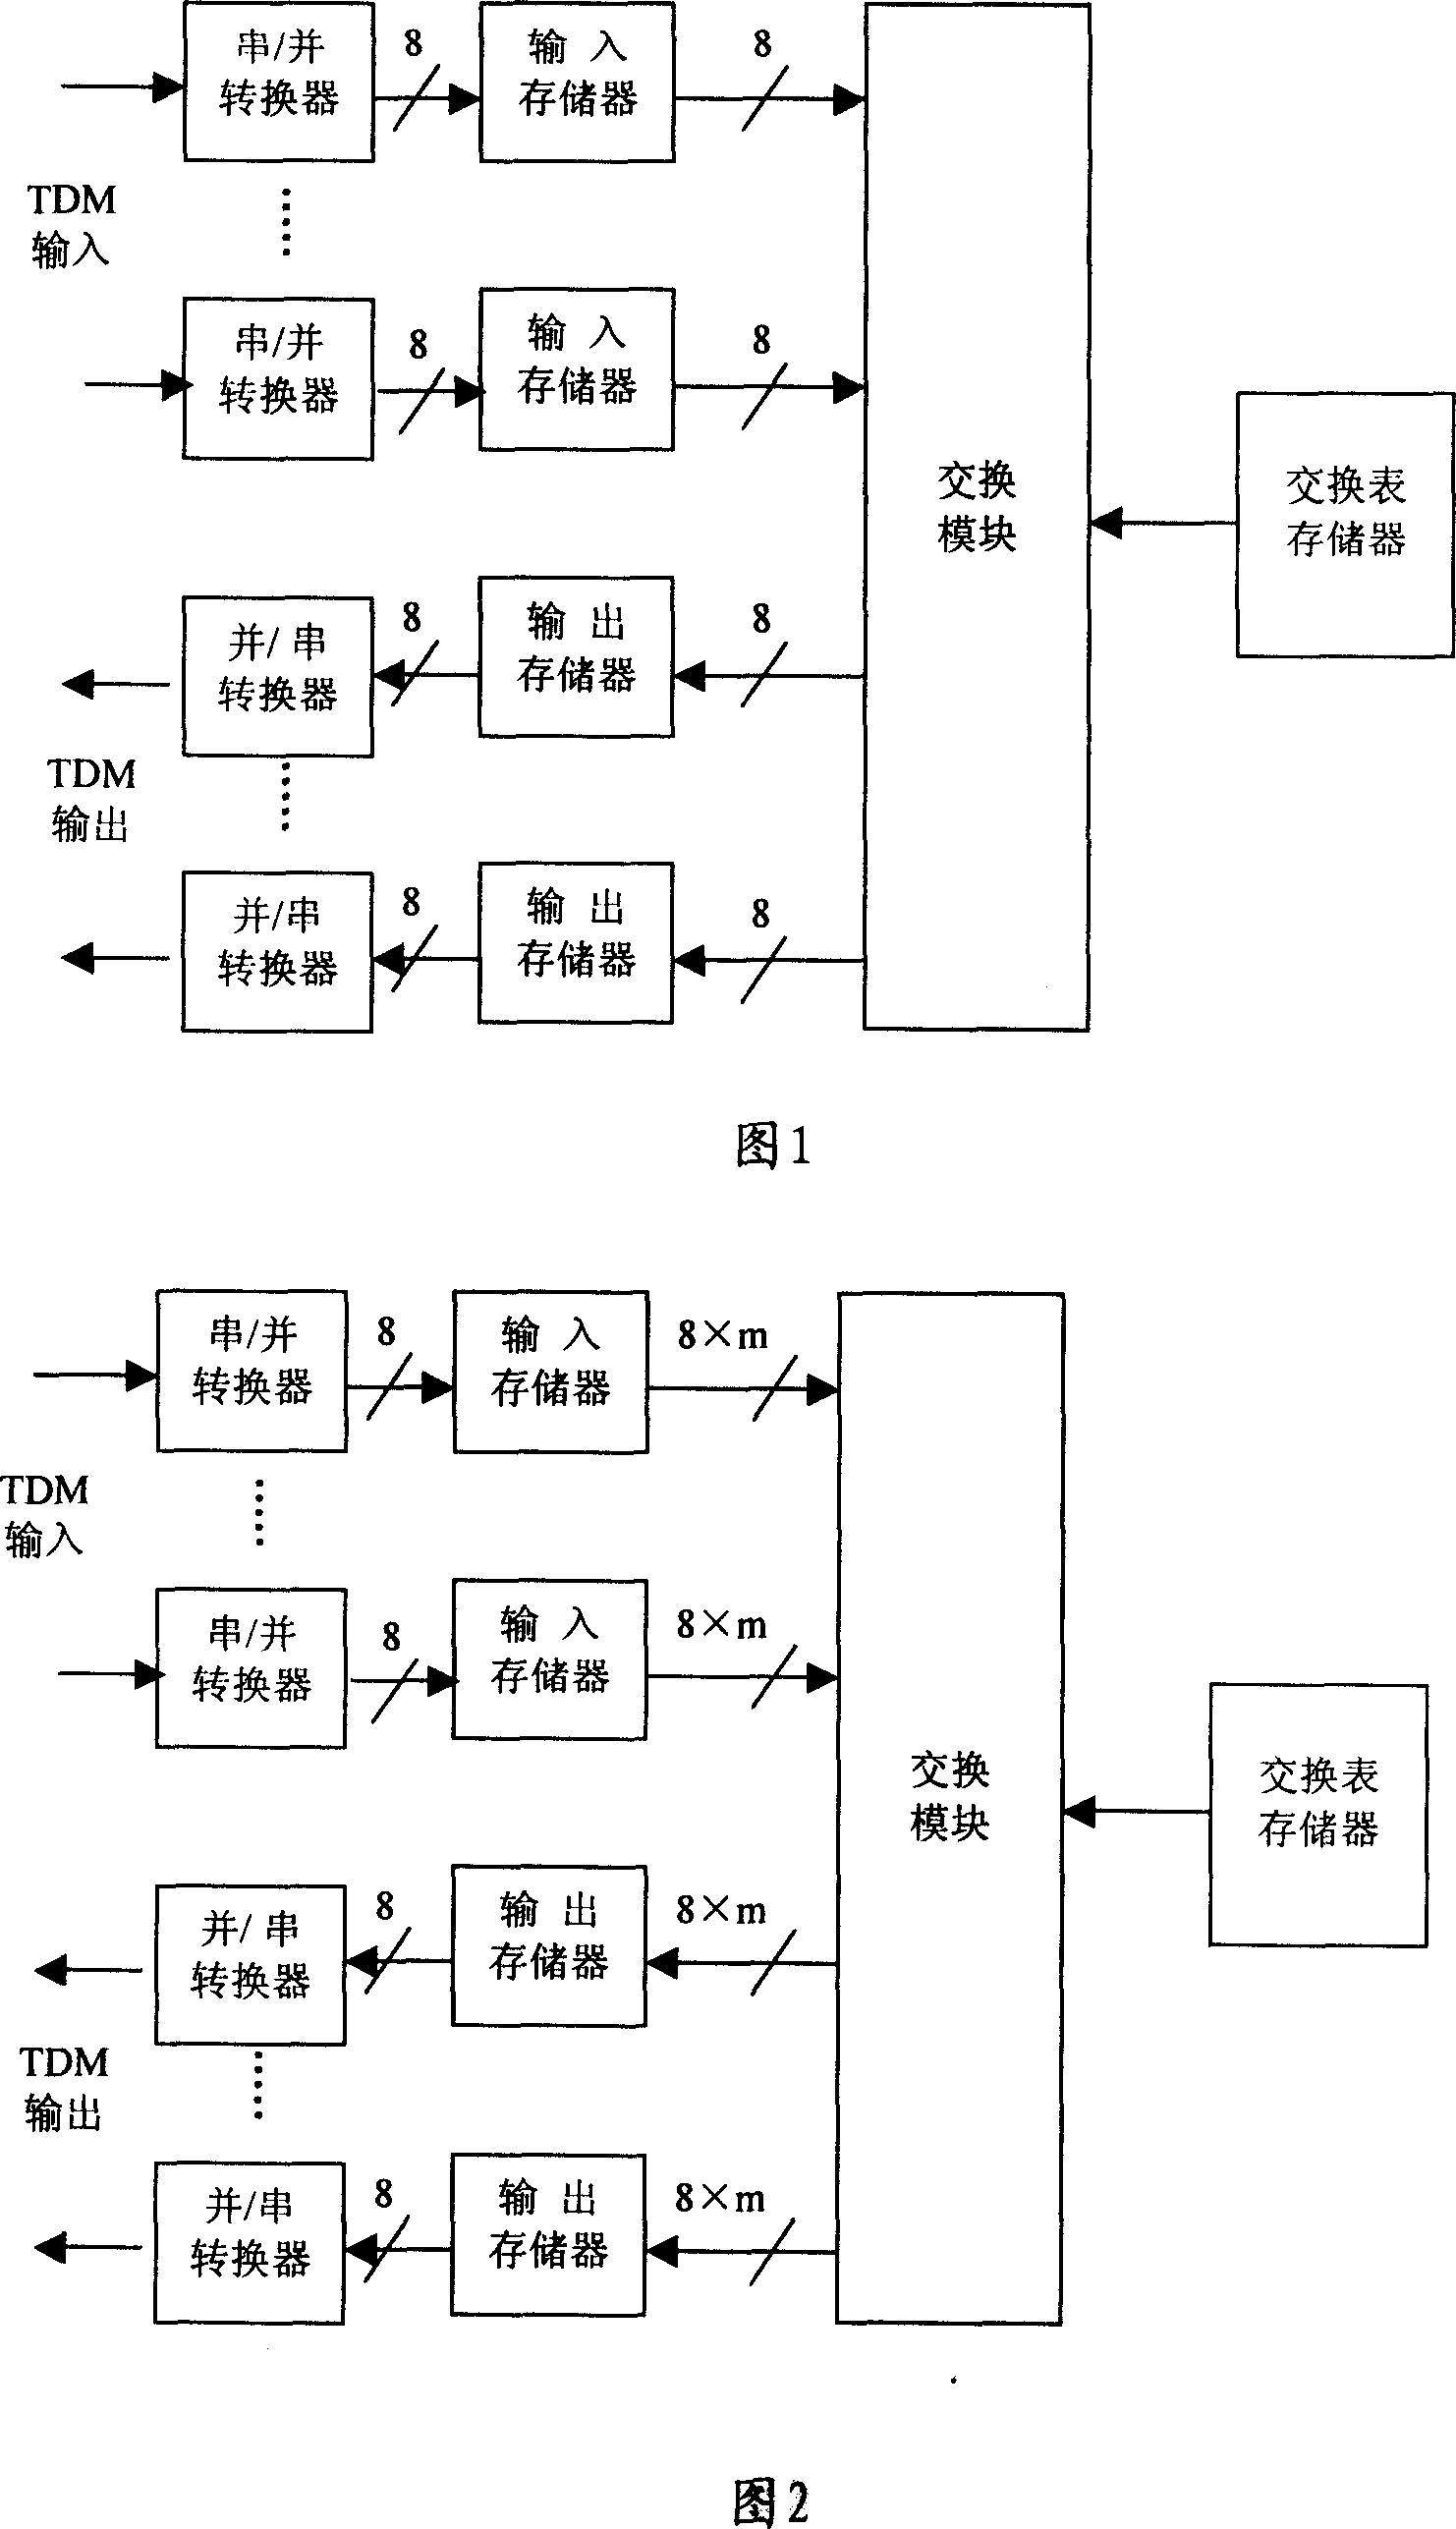 Mass TDMA complex switching chip data processing method